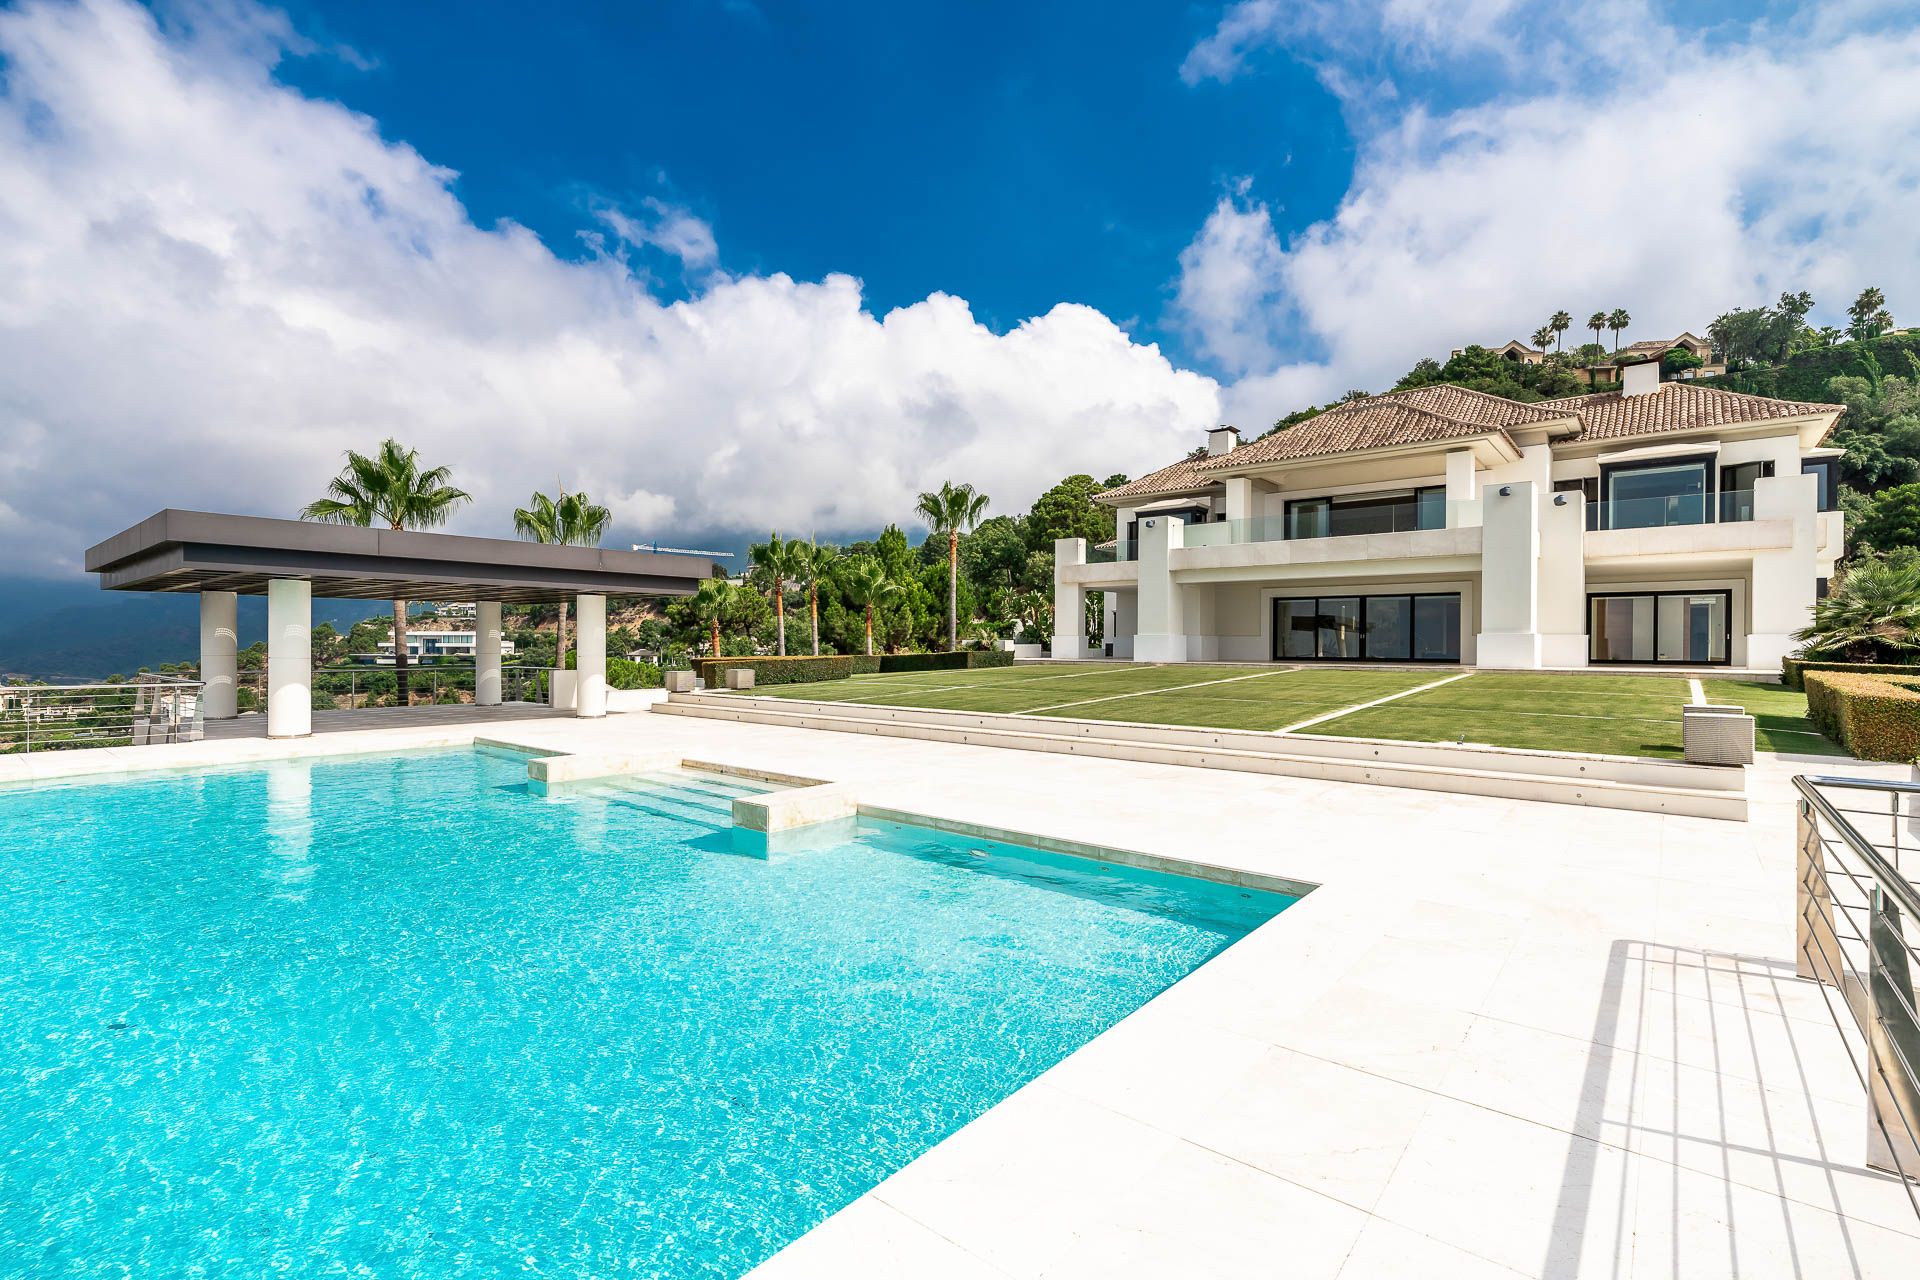 Spectacular mansion with breathtaking views | Engel & Völkers Marbella